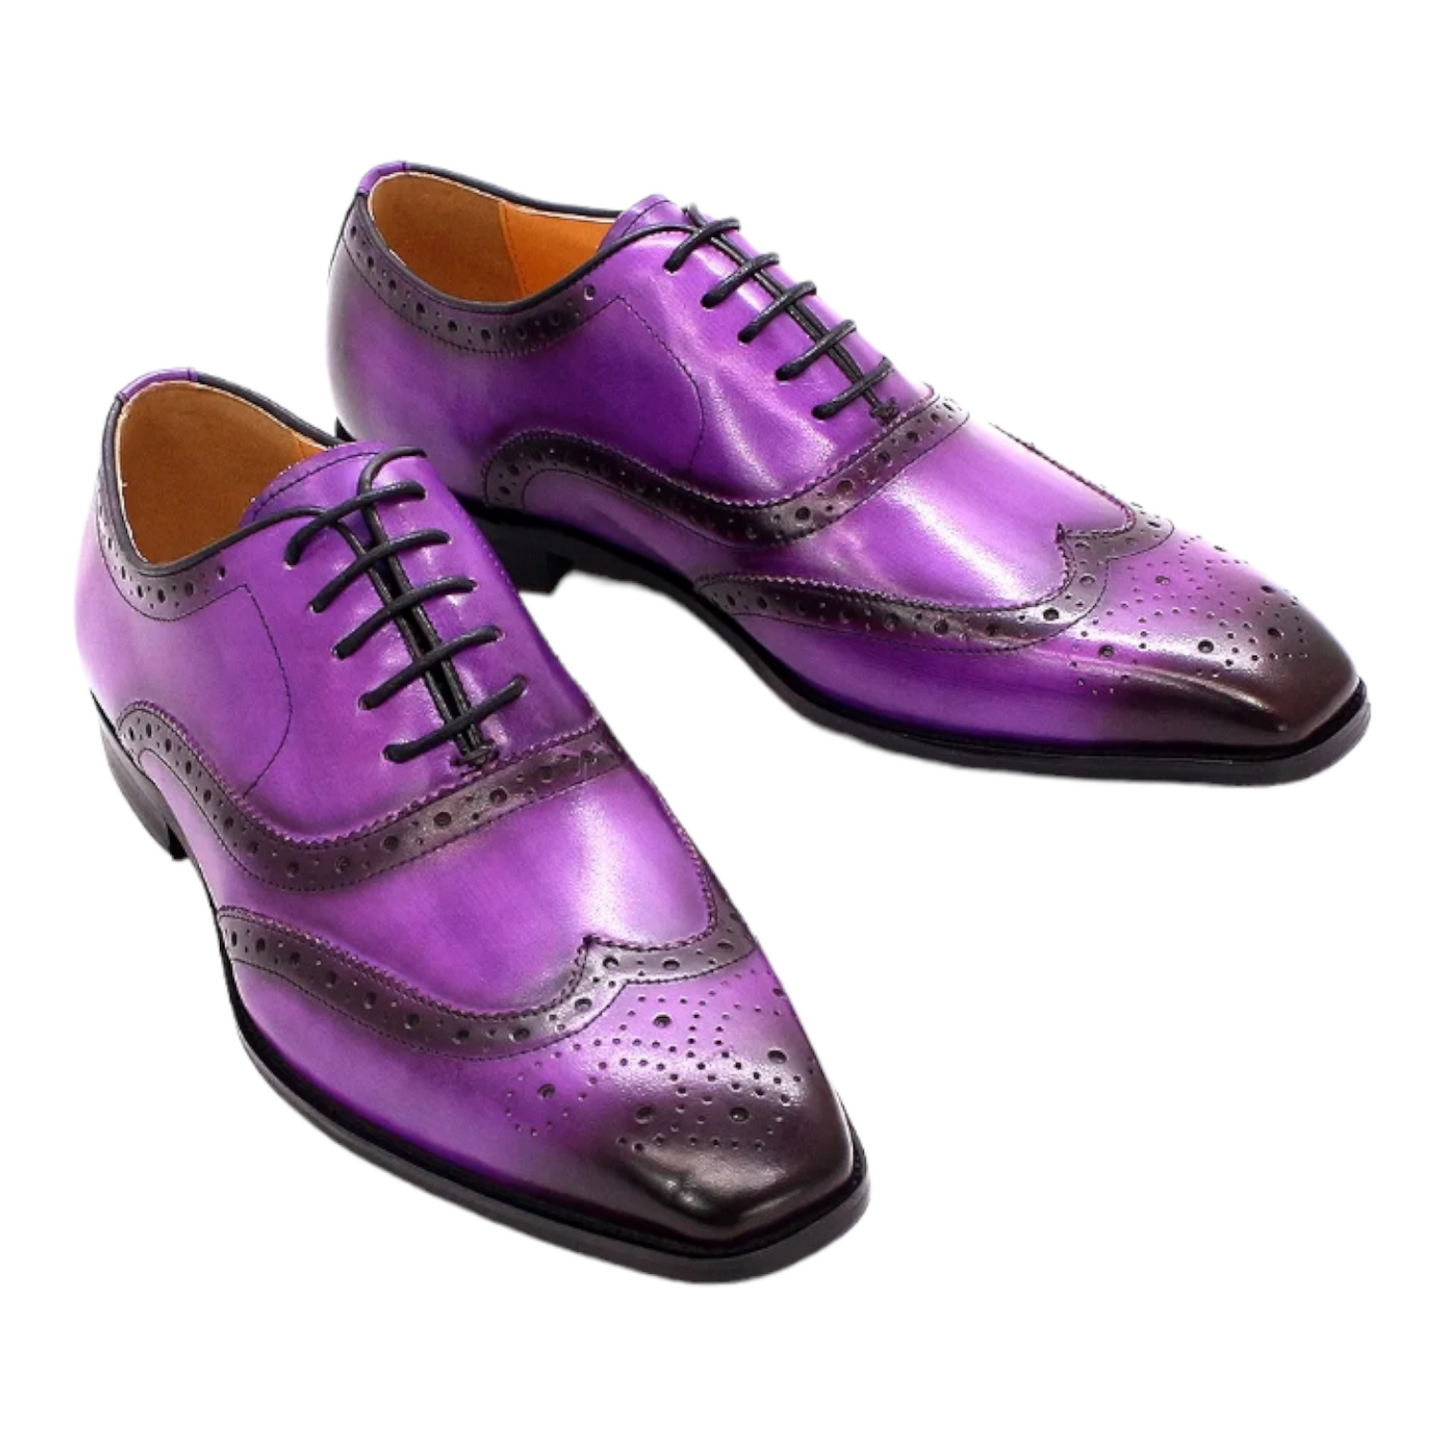 Men's Dress Shoes Size 6-13 Genuine Leather Handmade